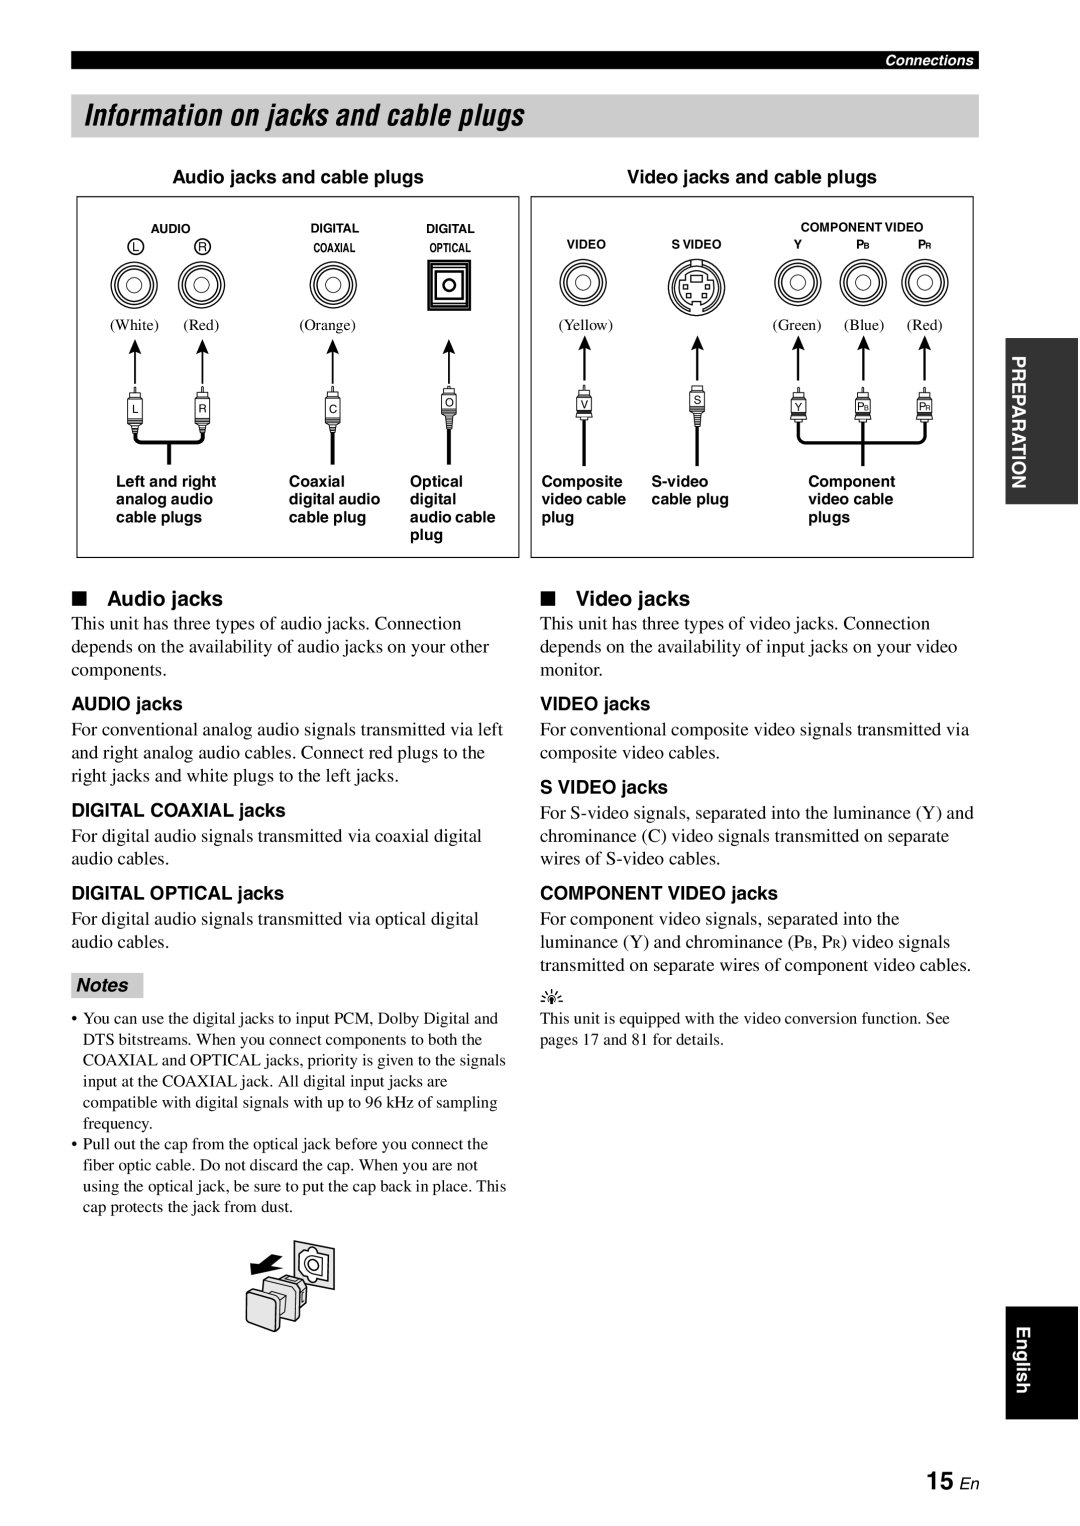 Yamaha HTR-6060 Information on jacks and cable plugs, 15 En, Video jacks, Audio jacks and cable plugs, AUDIO jacks 